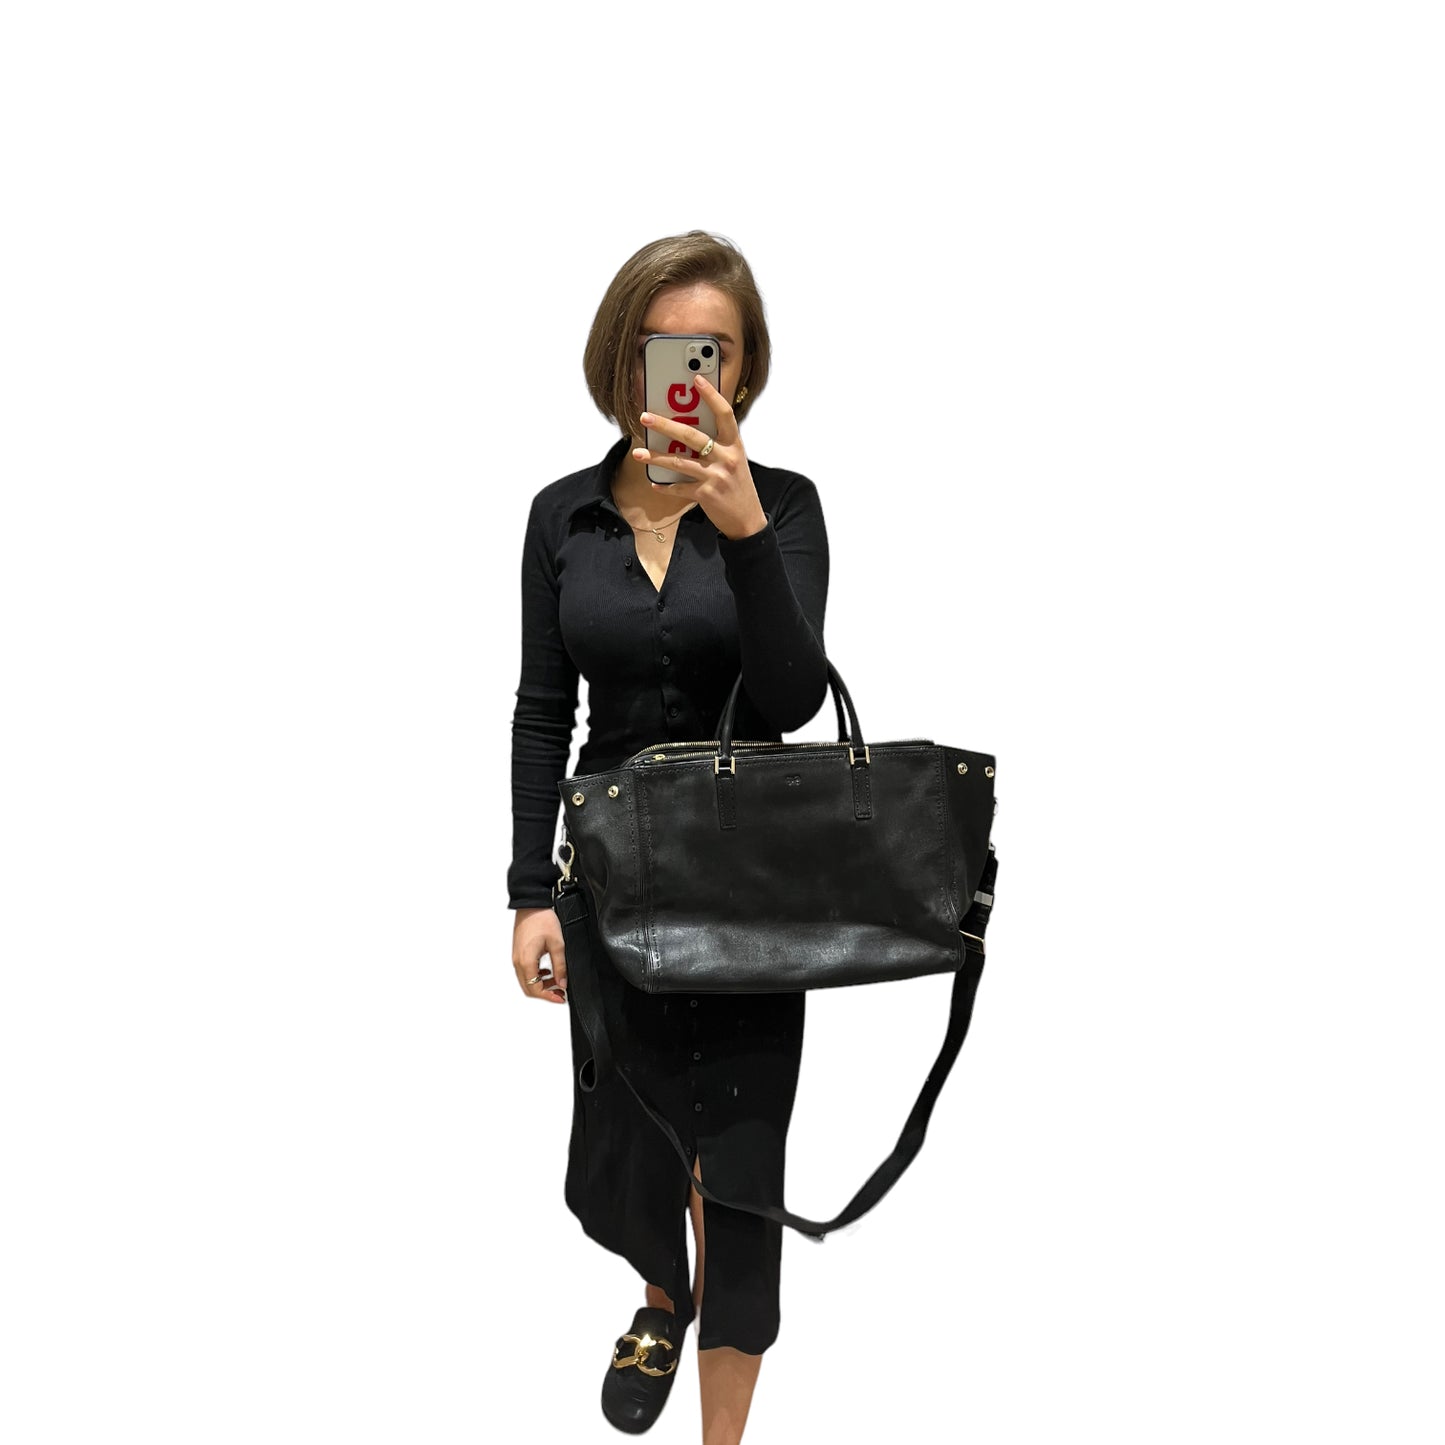 Anya Hindmarch Black Bag with Laptop Bag